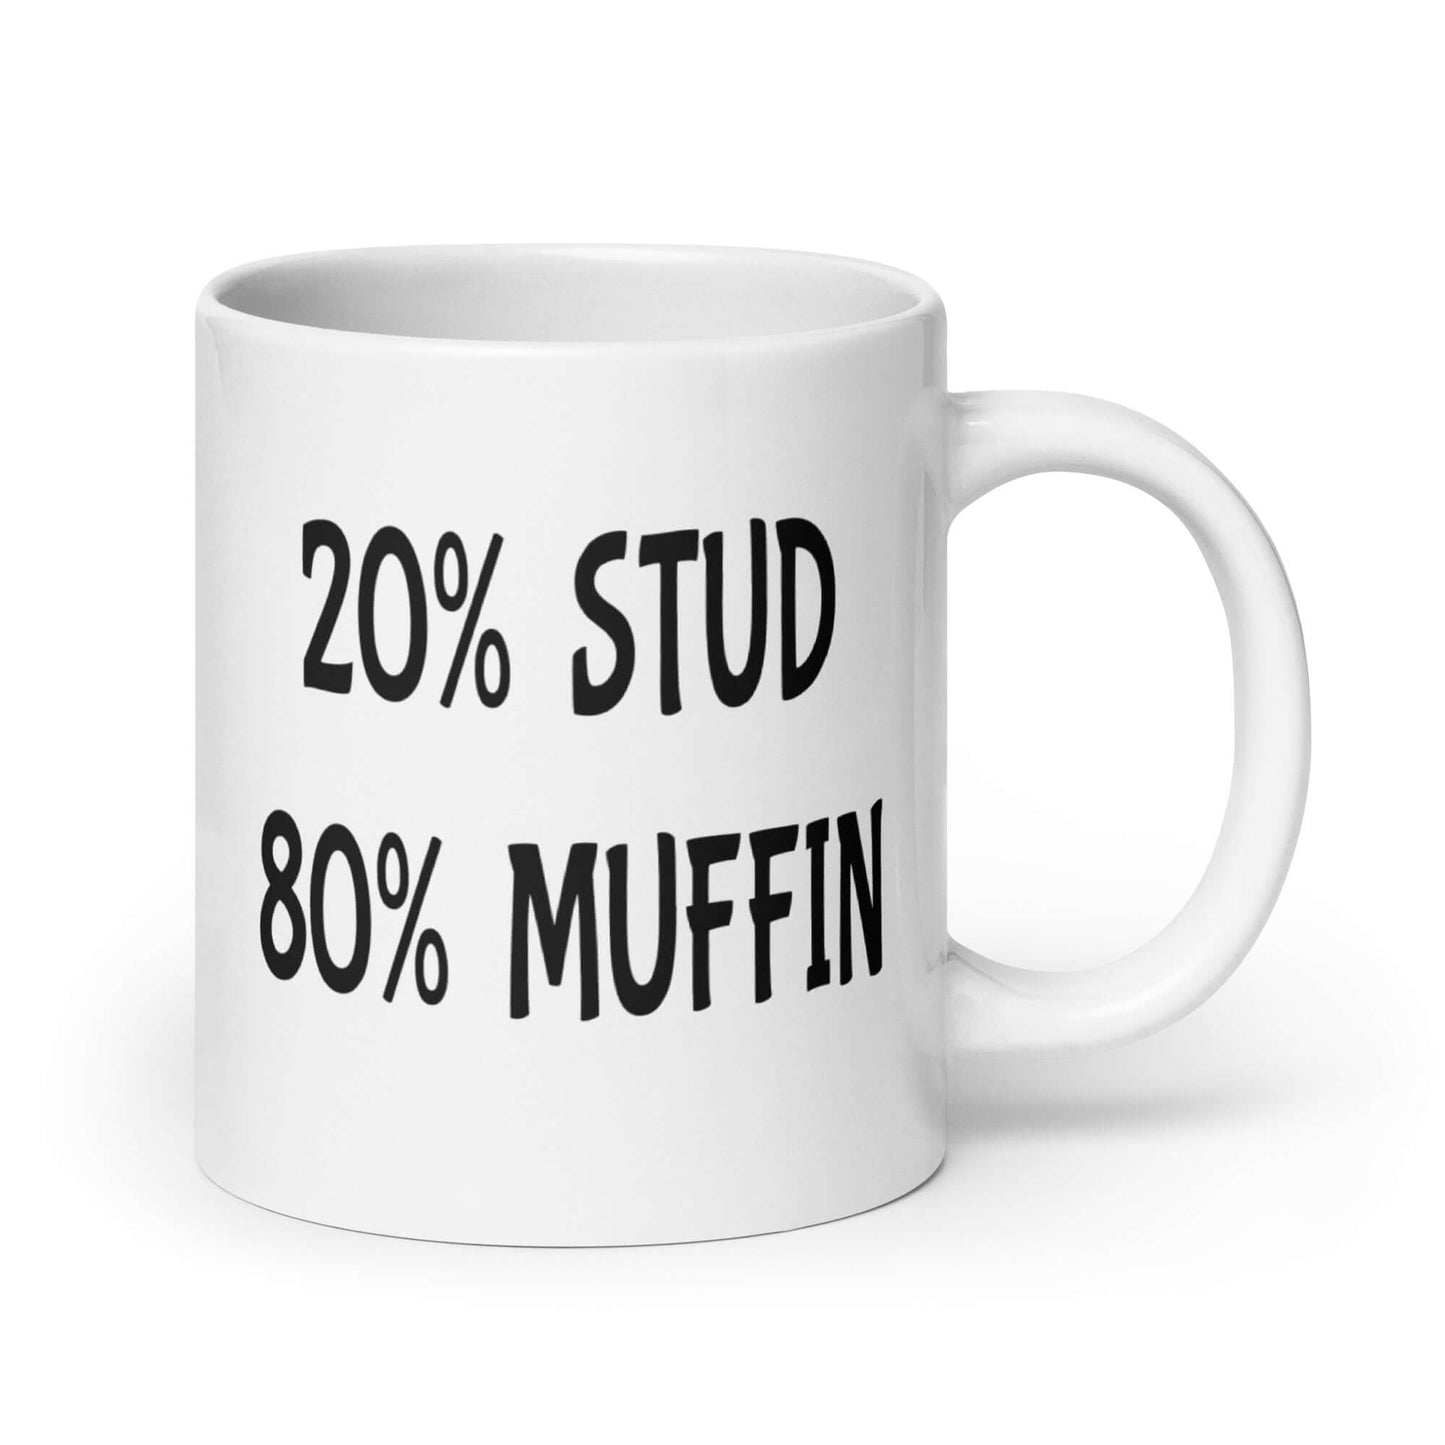 Funny stud muffin mug